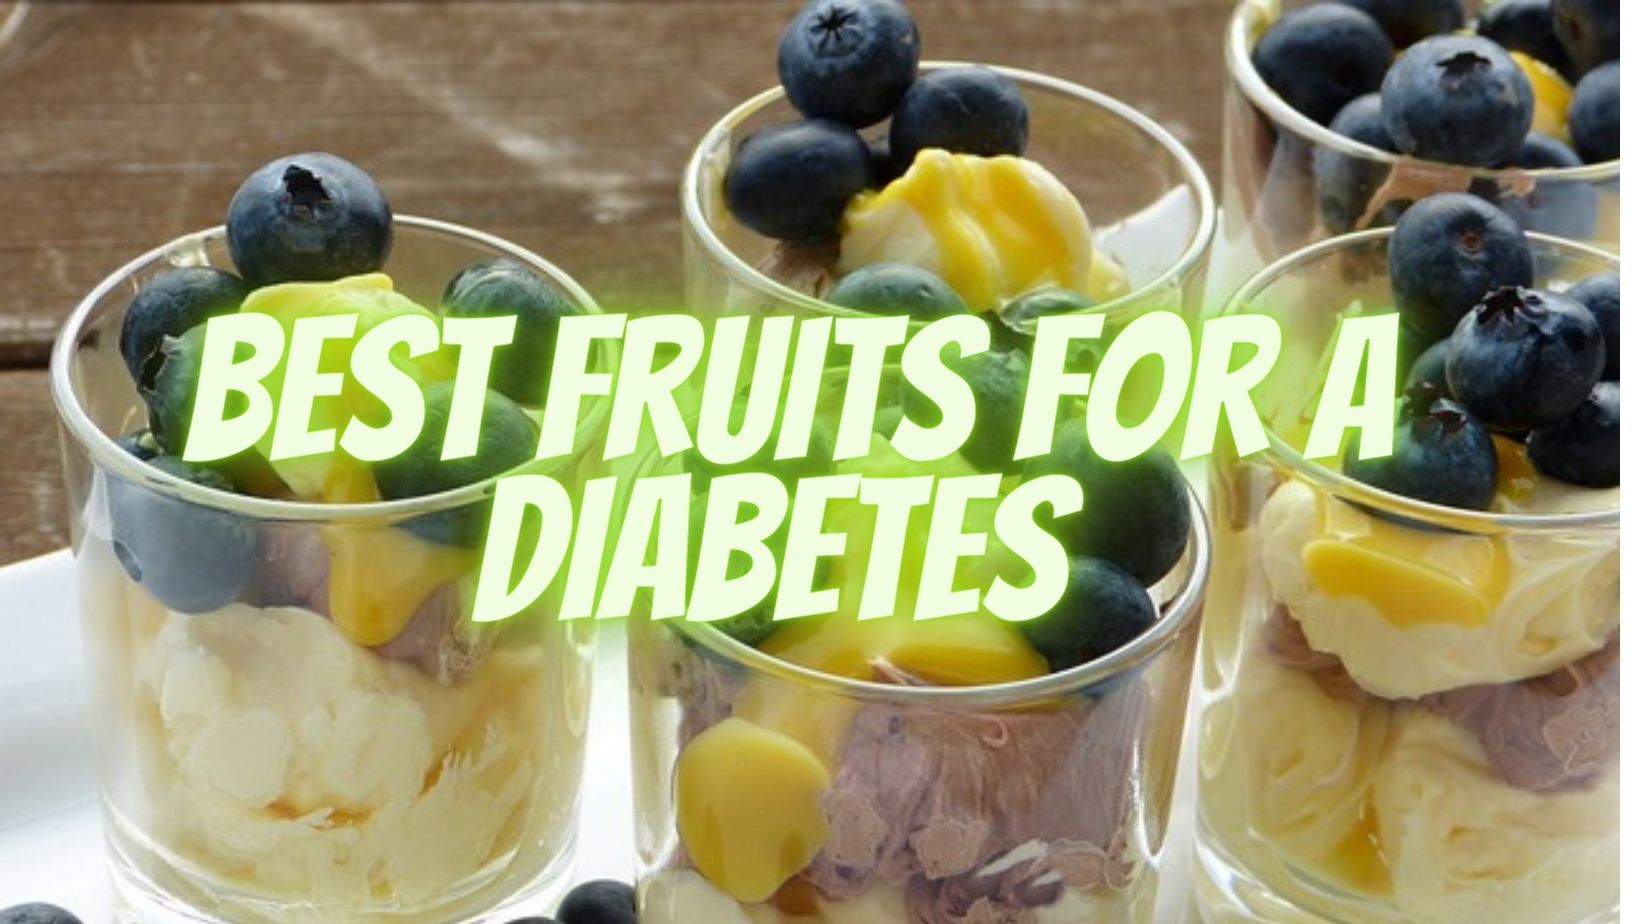 Best Fruits for a Diabetes